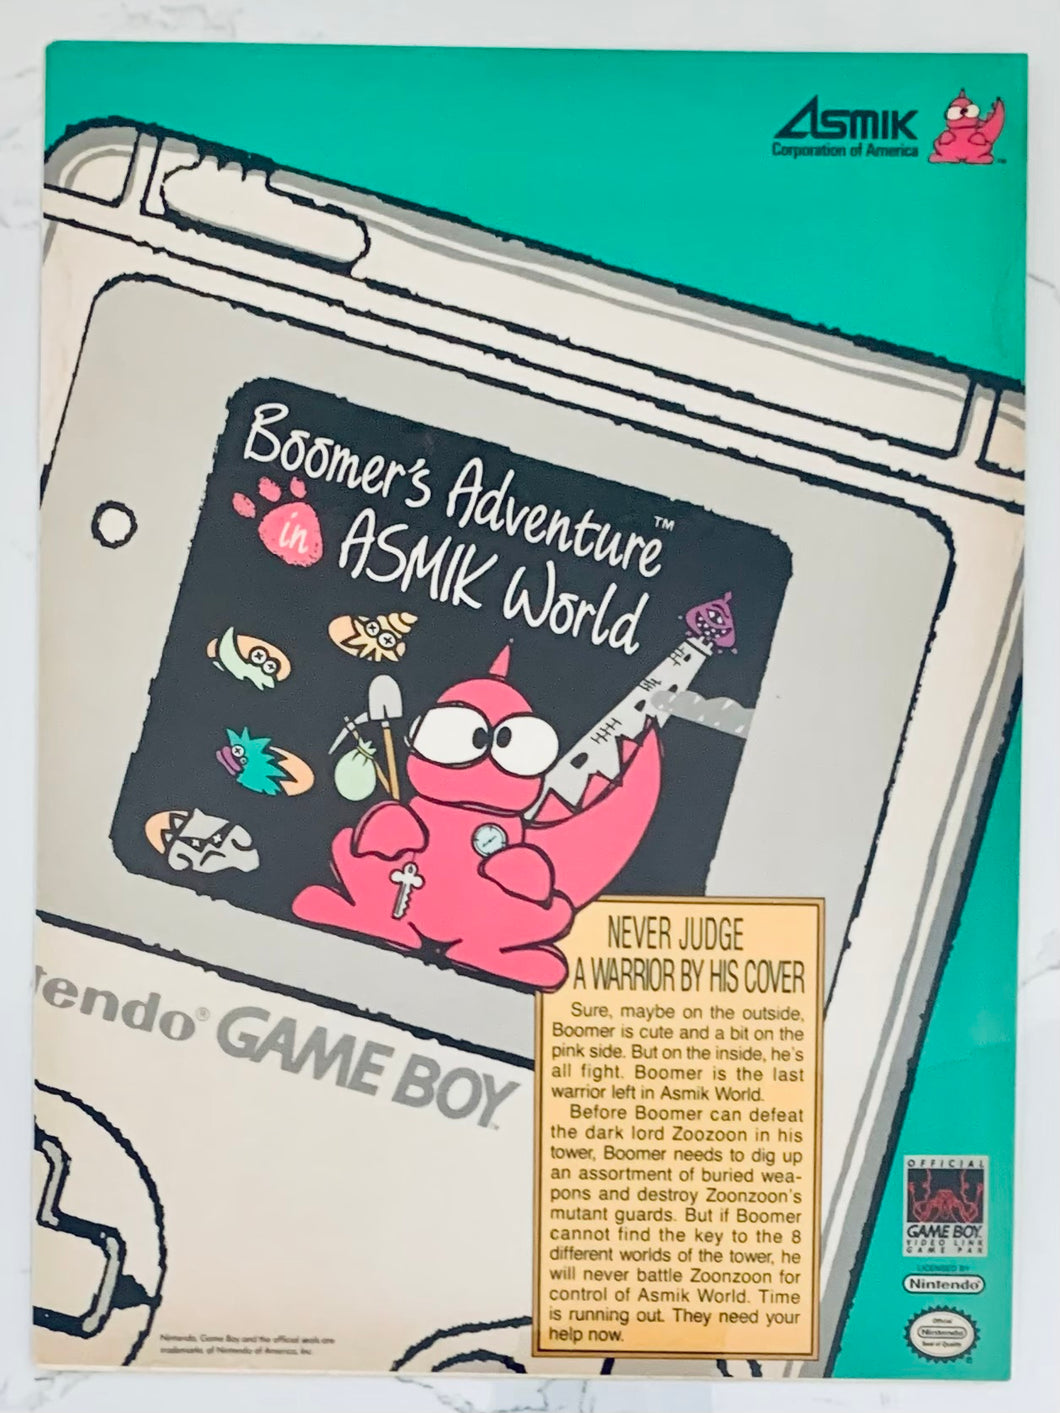 Boomer’s Adventure in ASMIK World - GameBoy - Original Vintage Advertisement - Print Ads - Laminated A4 Poster